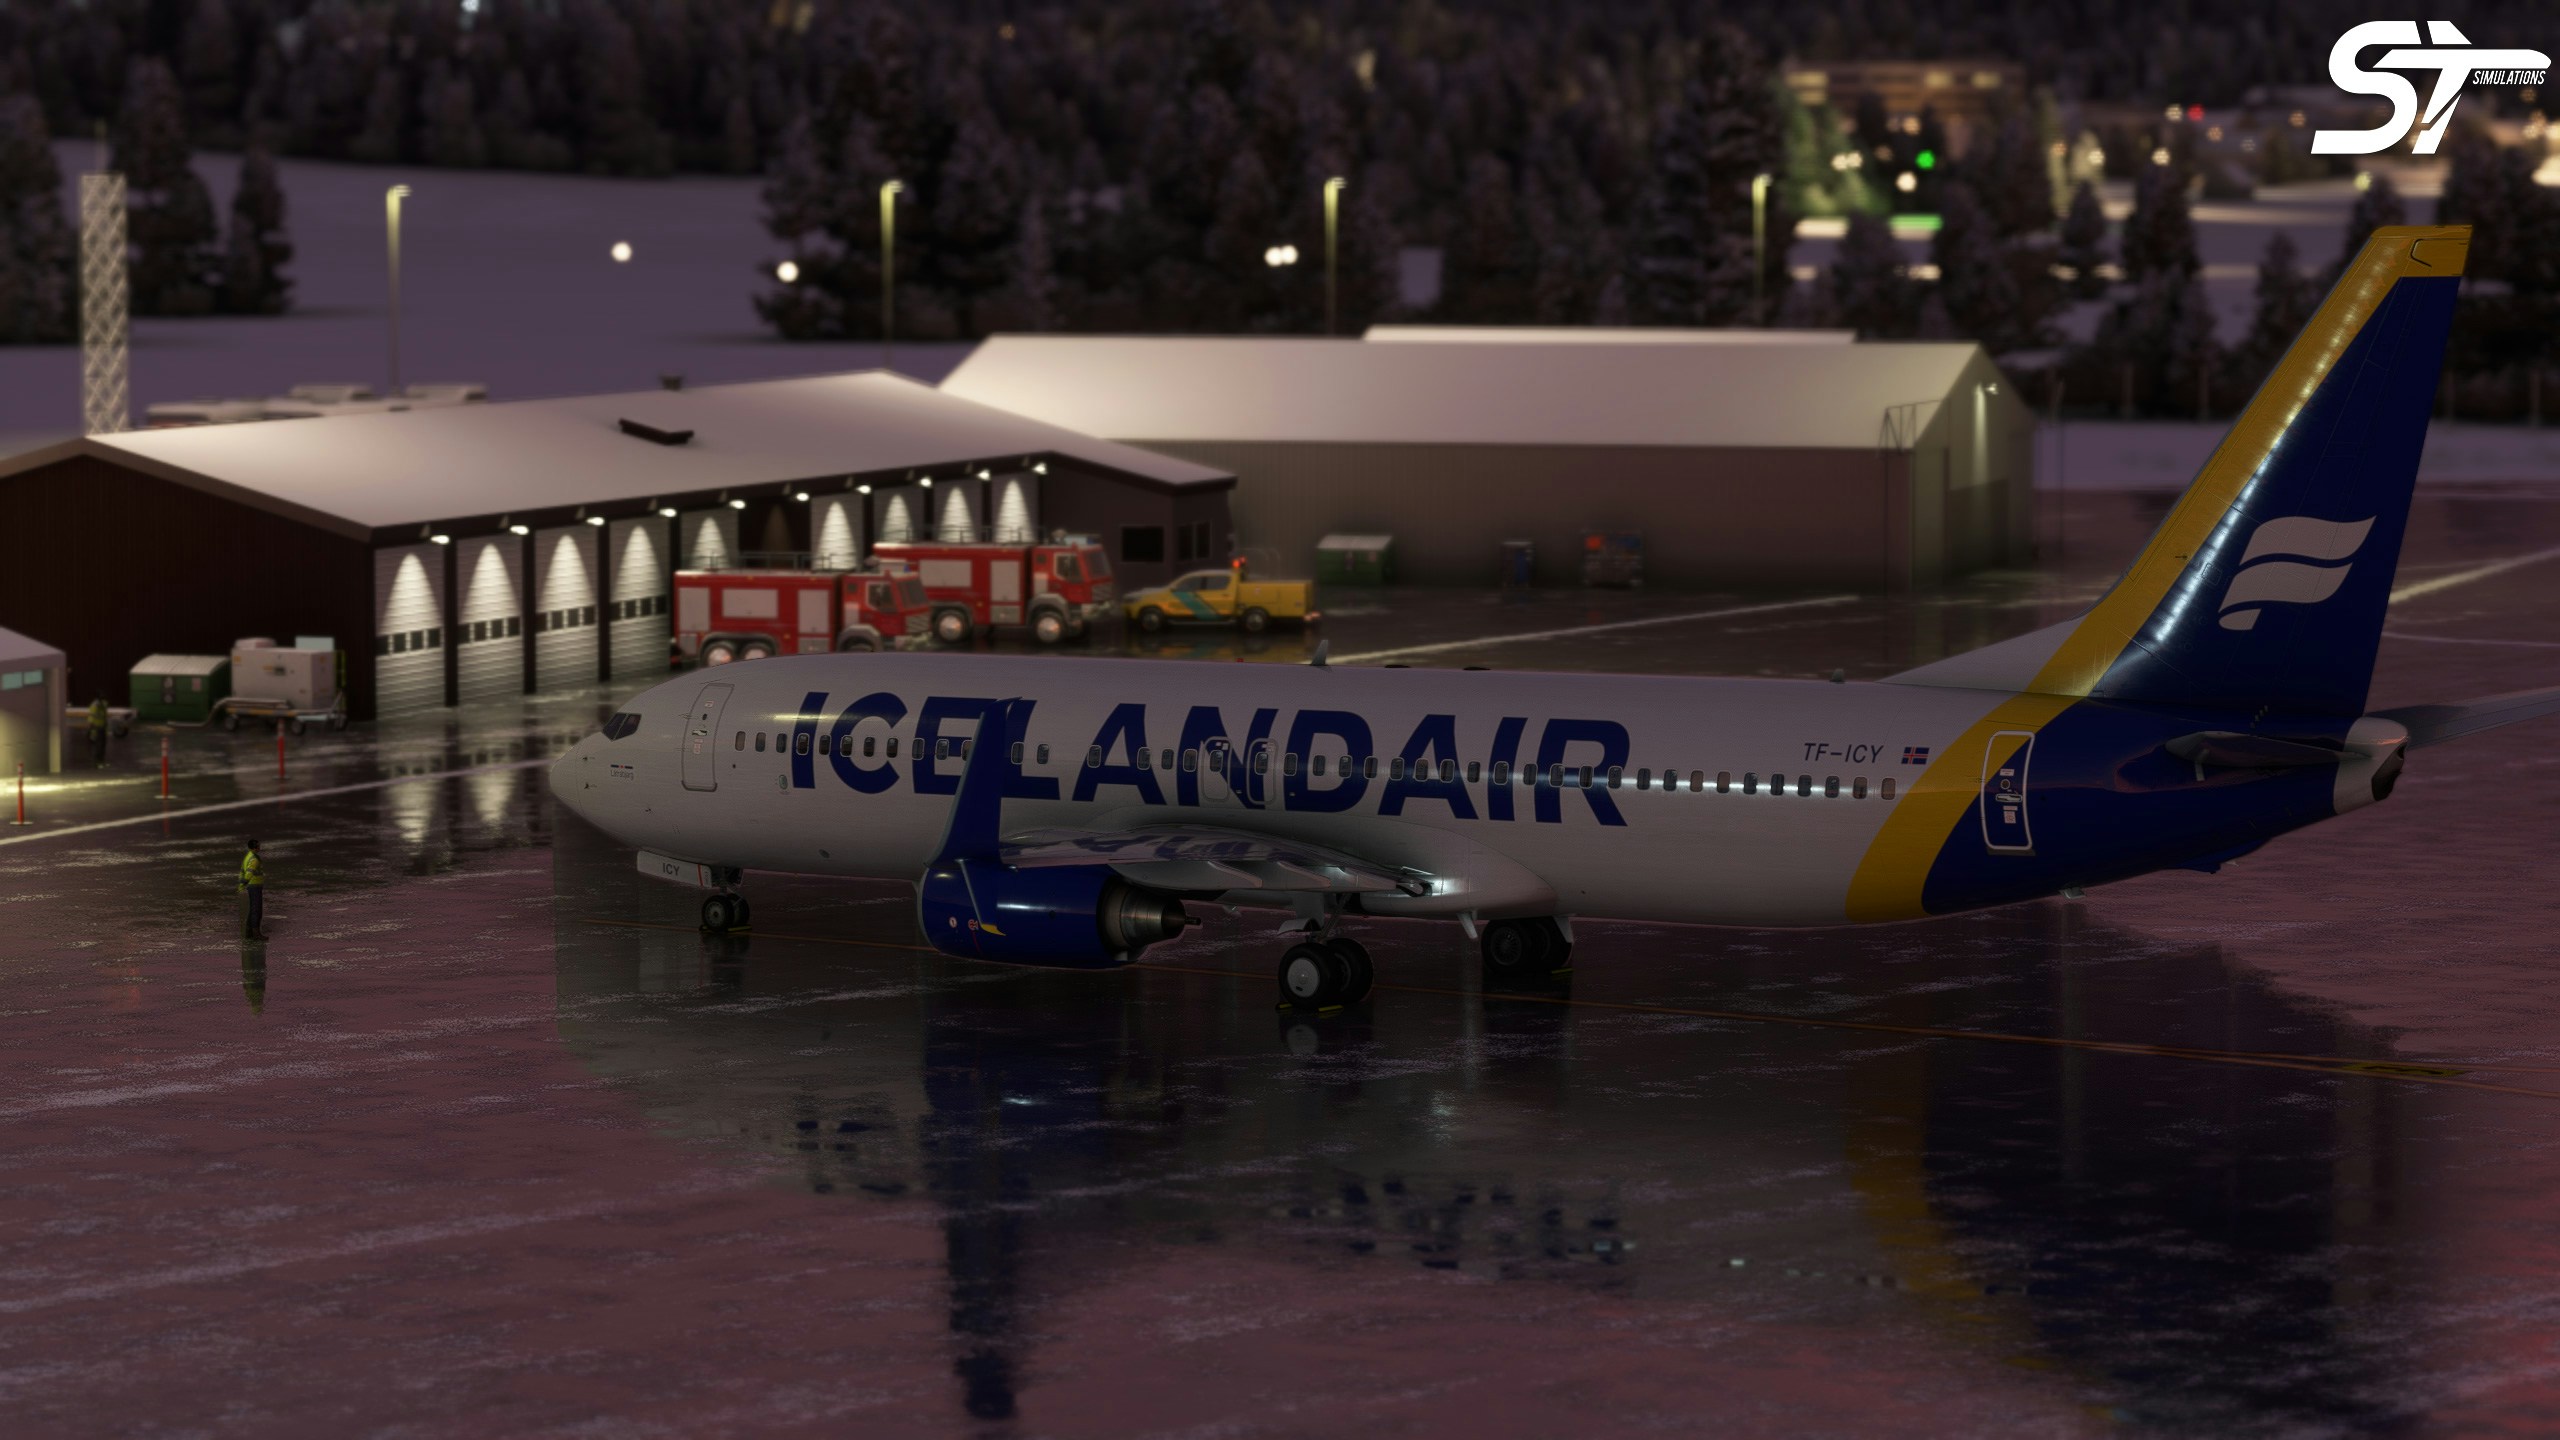 ST Simulations Release Iceland's Egilsstadir for MSFS